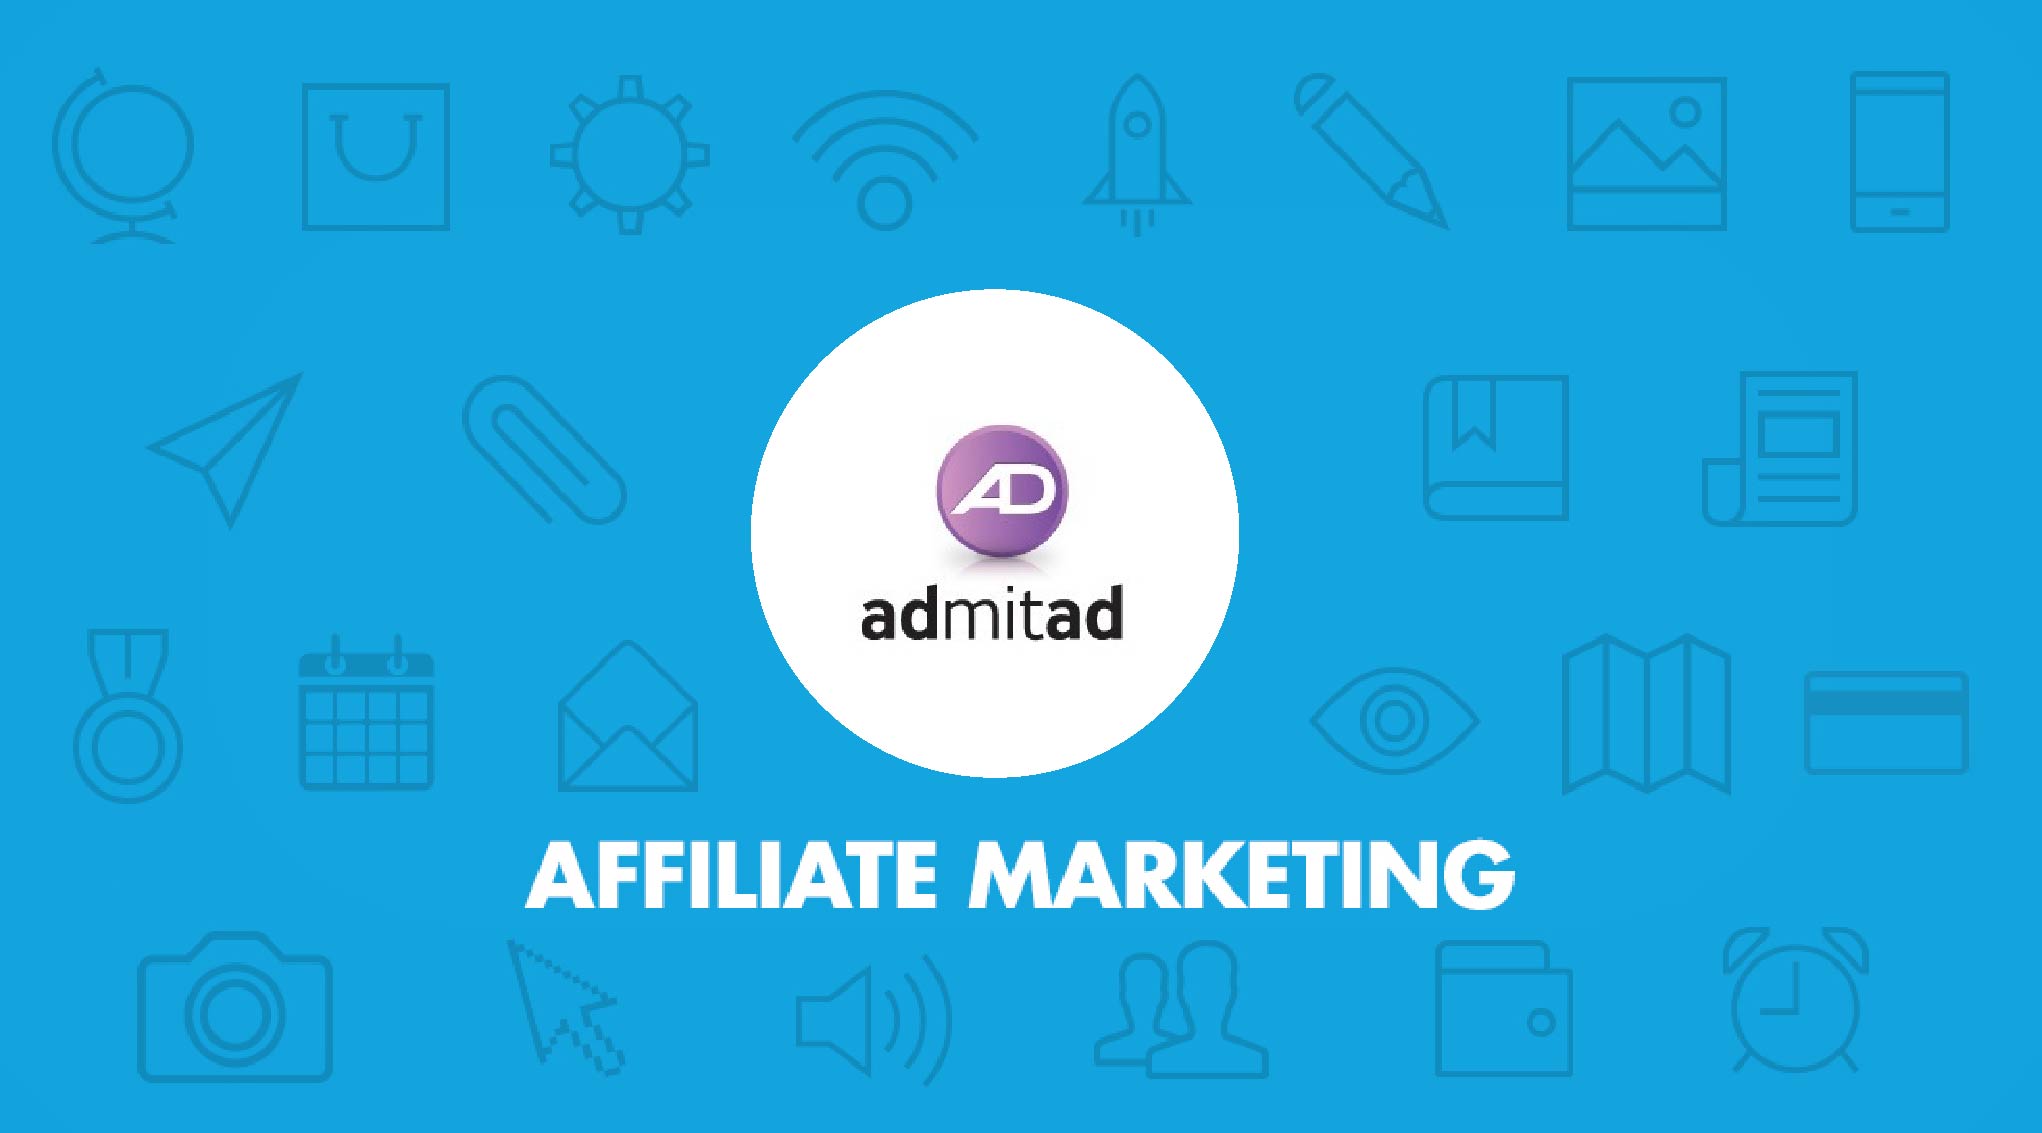 admit ad affiliate marketing